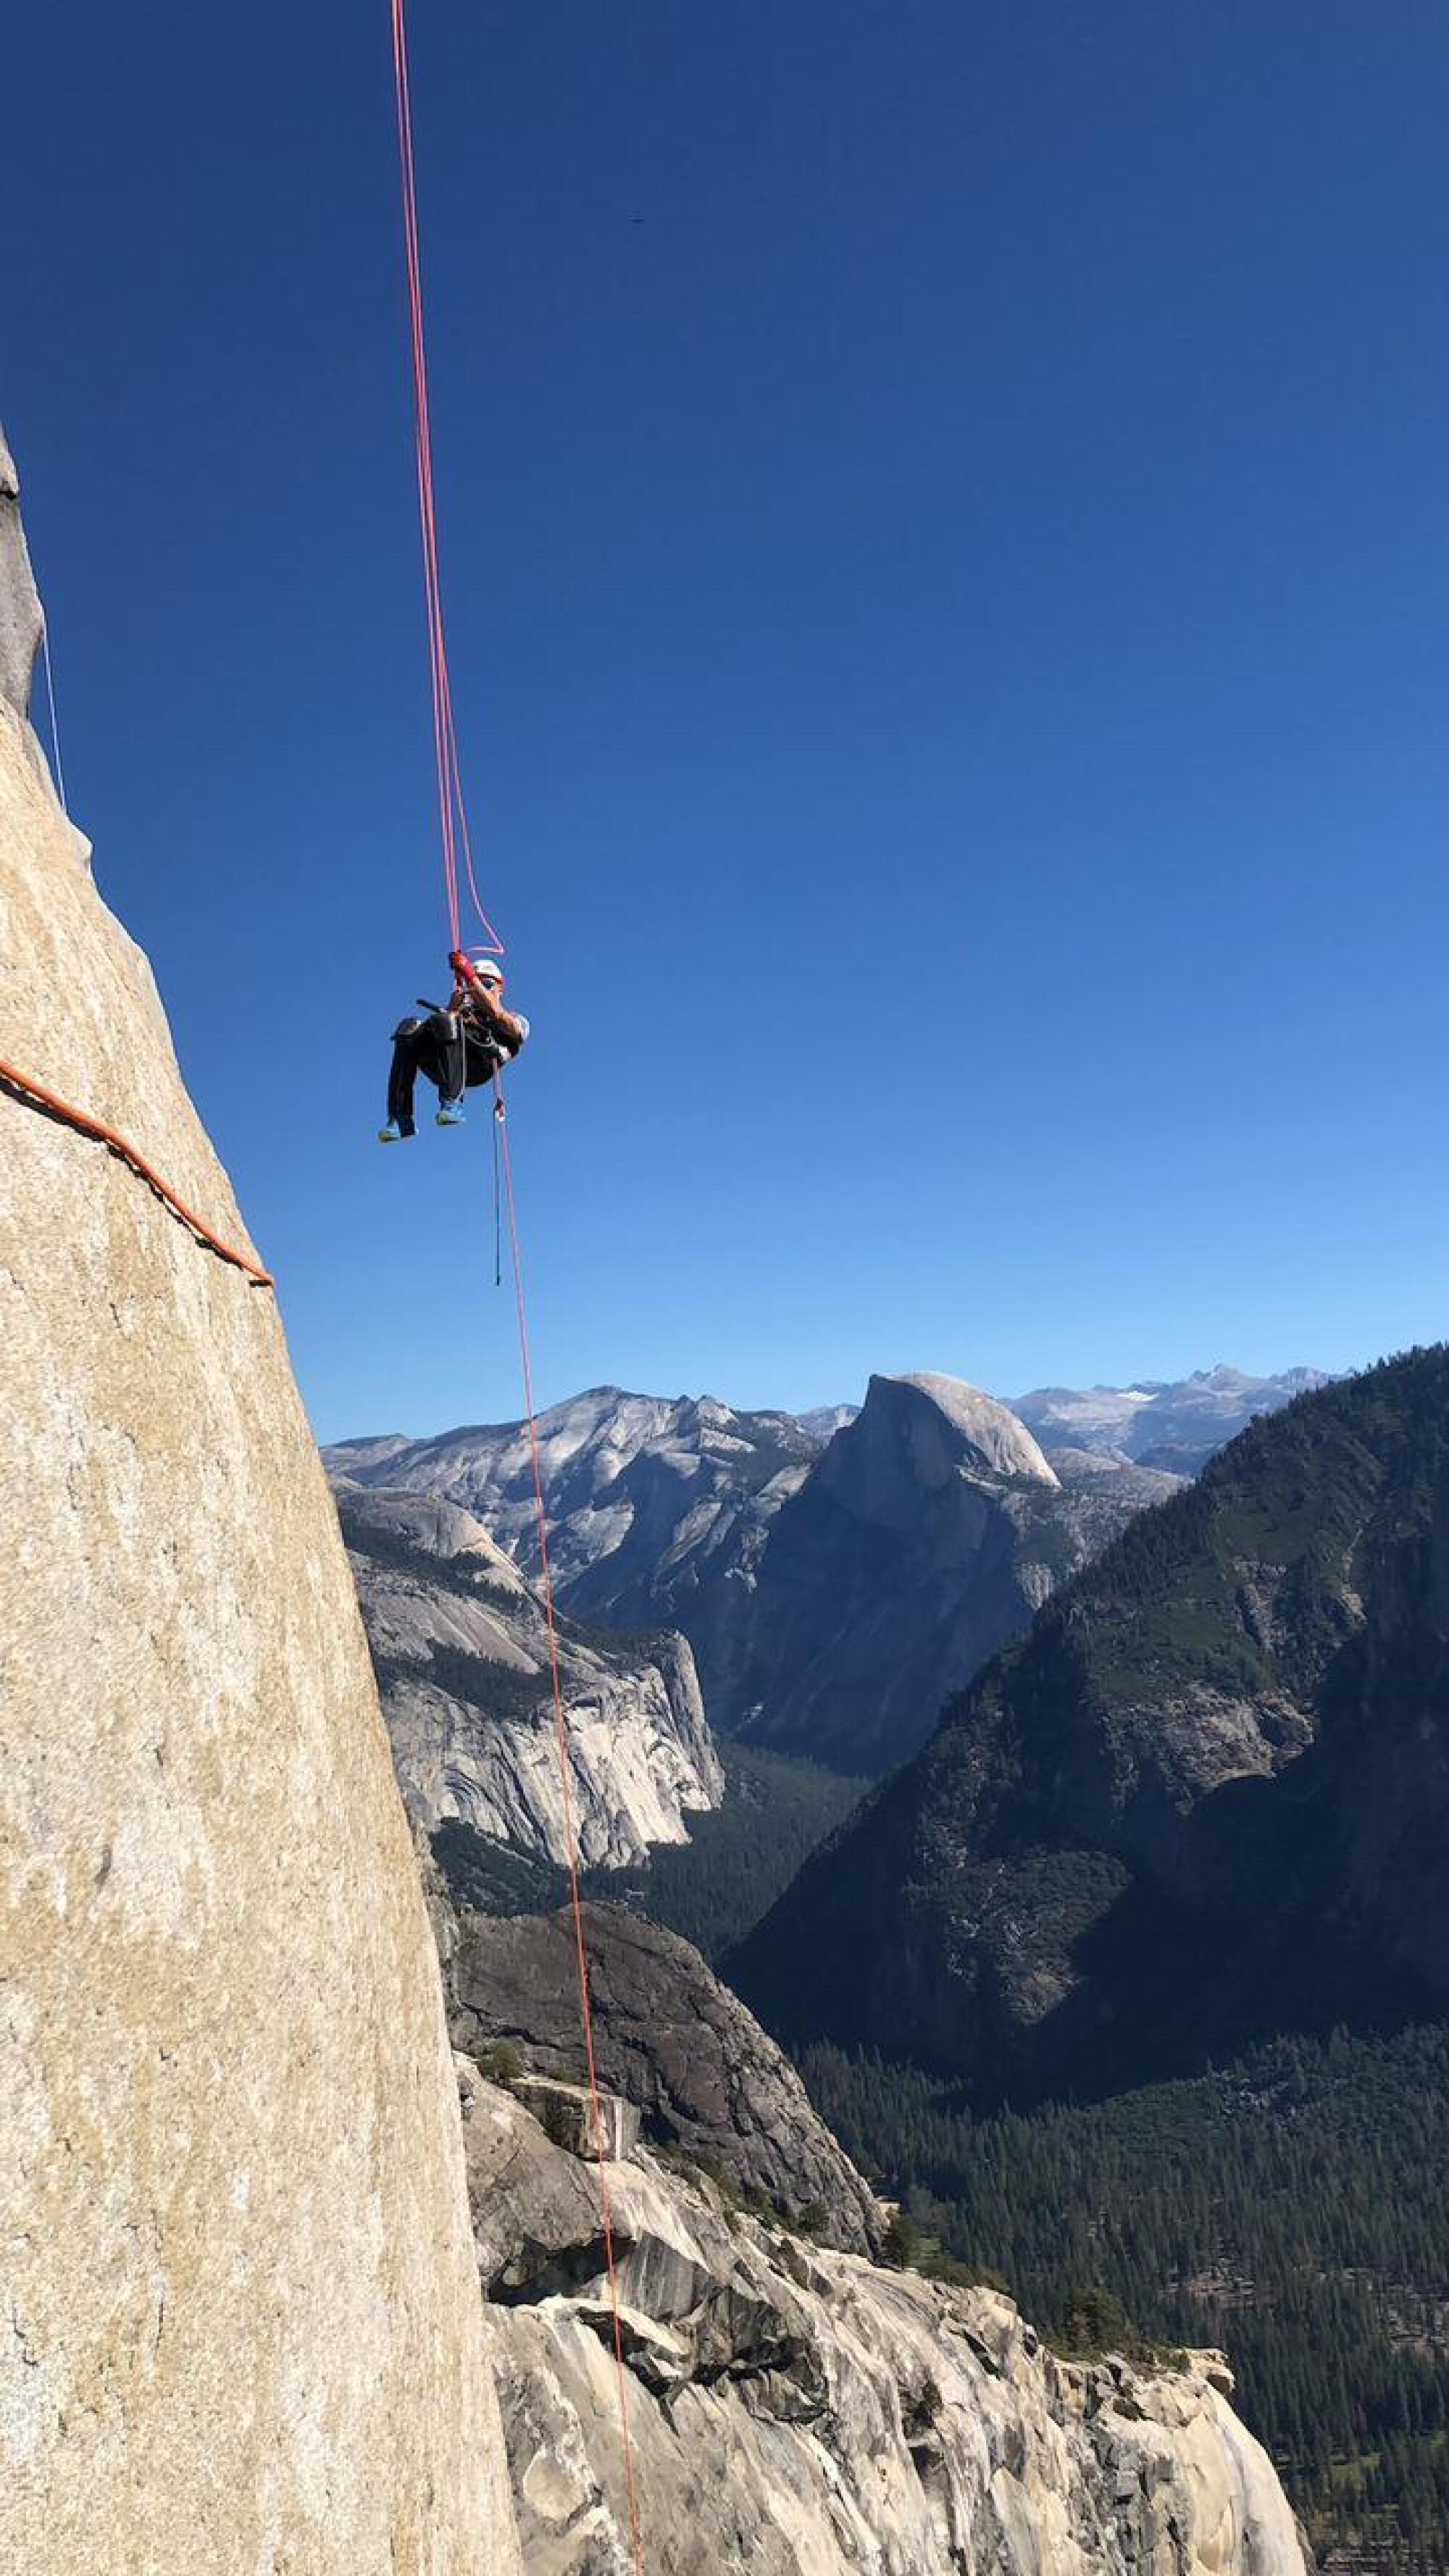 Zuko Carrasco dangles from a climbing rope on El Capitan. 